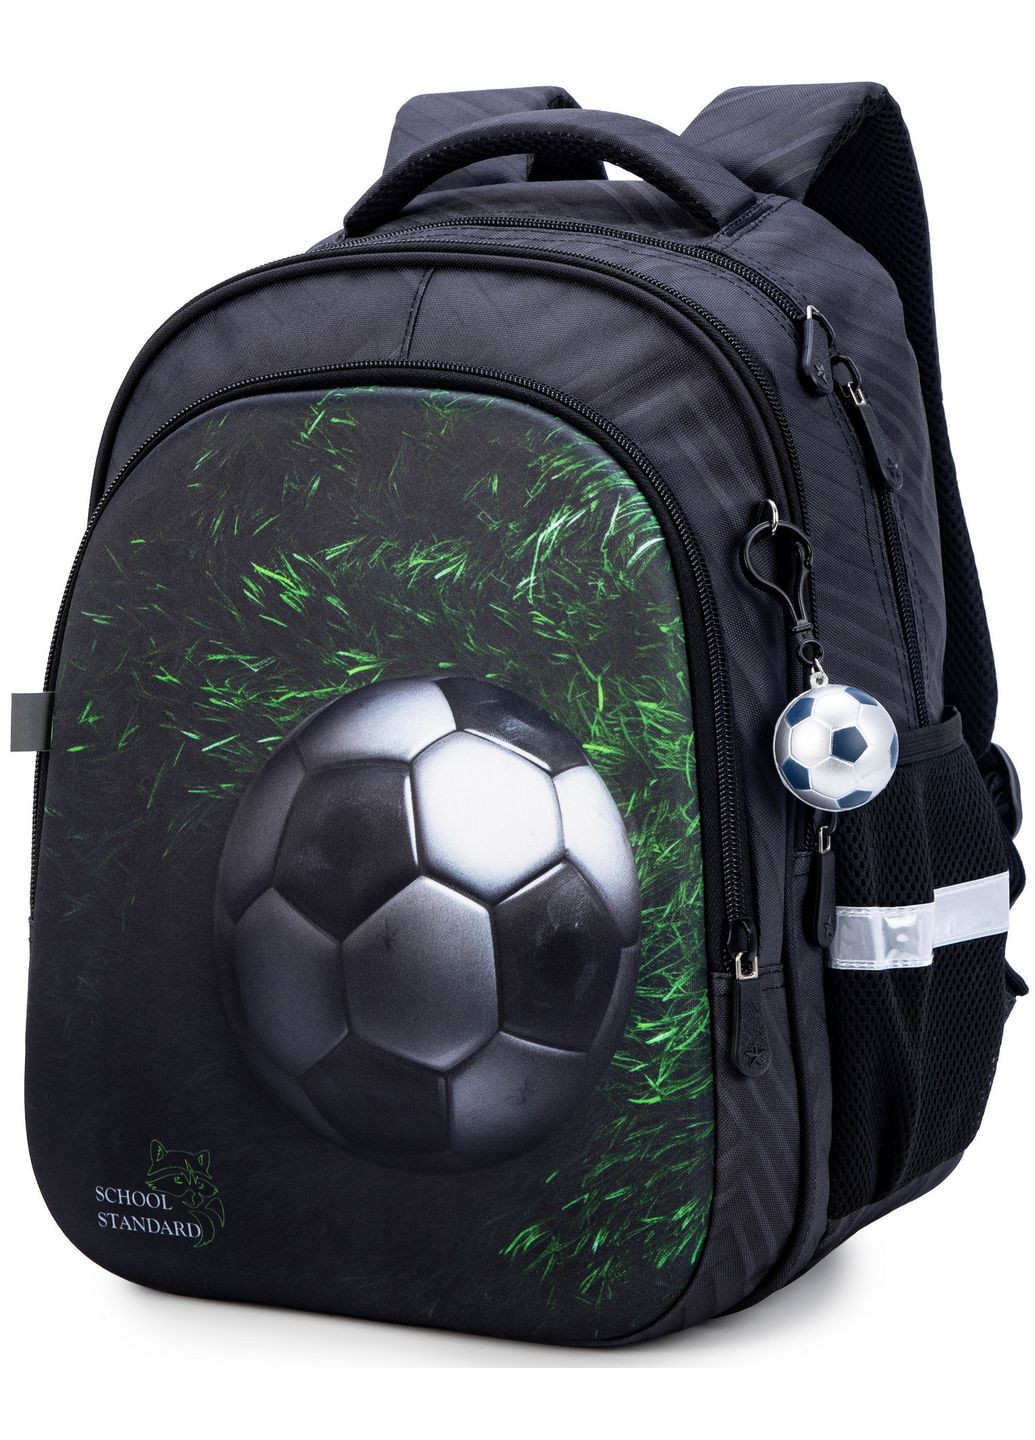 Ортопедический рюкзак для мальчика Футбол 38х30х18 смд ля первоклассника (150-7) School Standard (293815082)